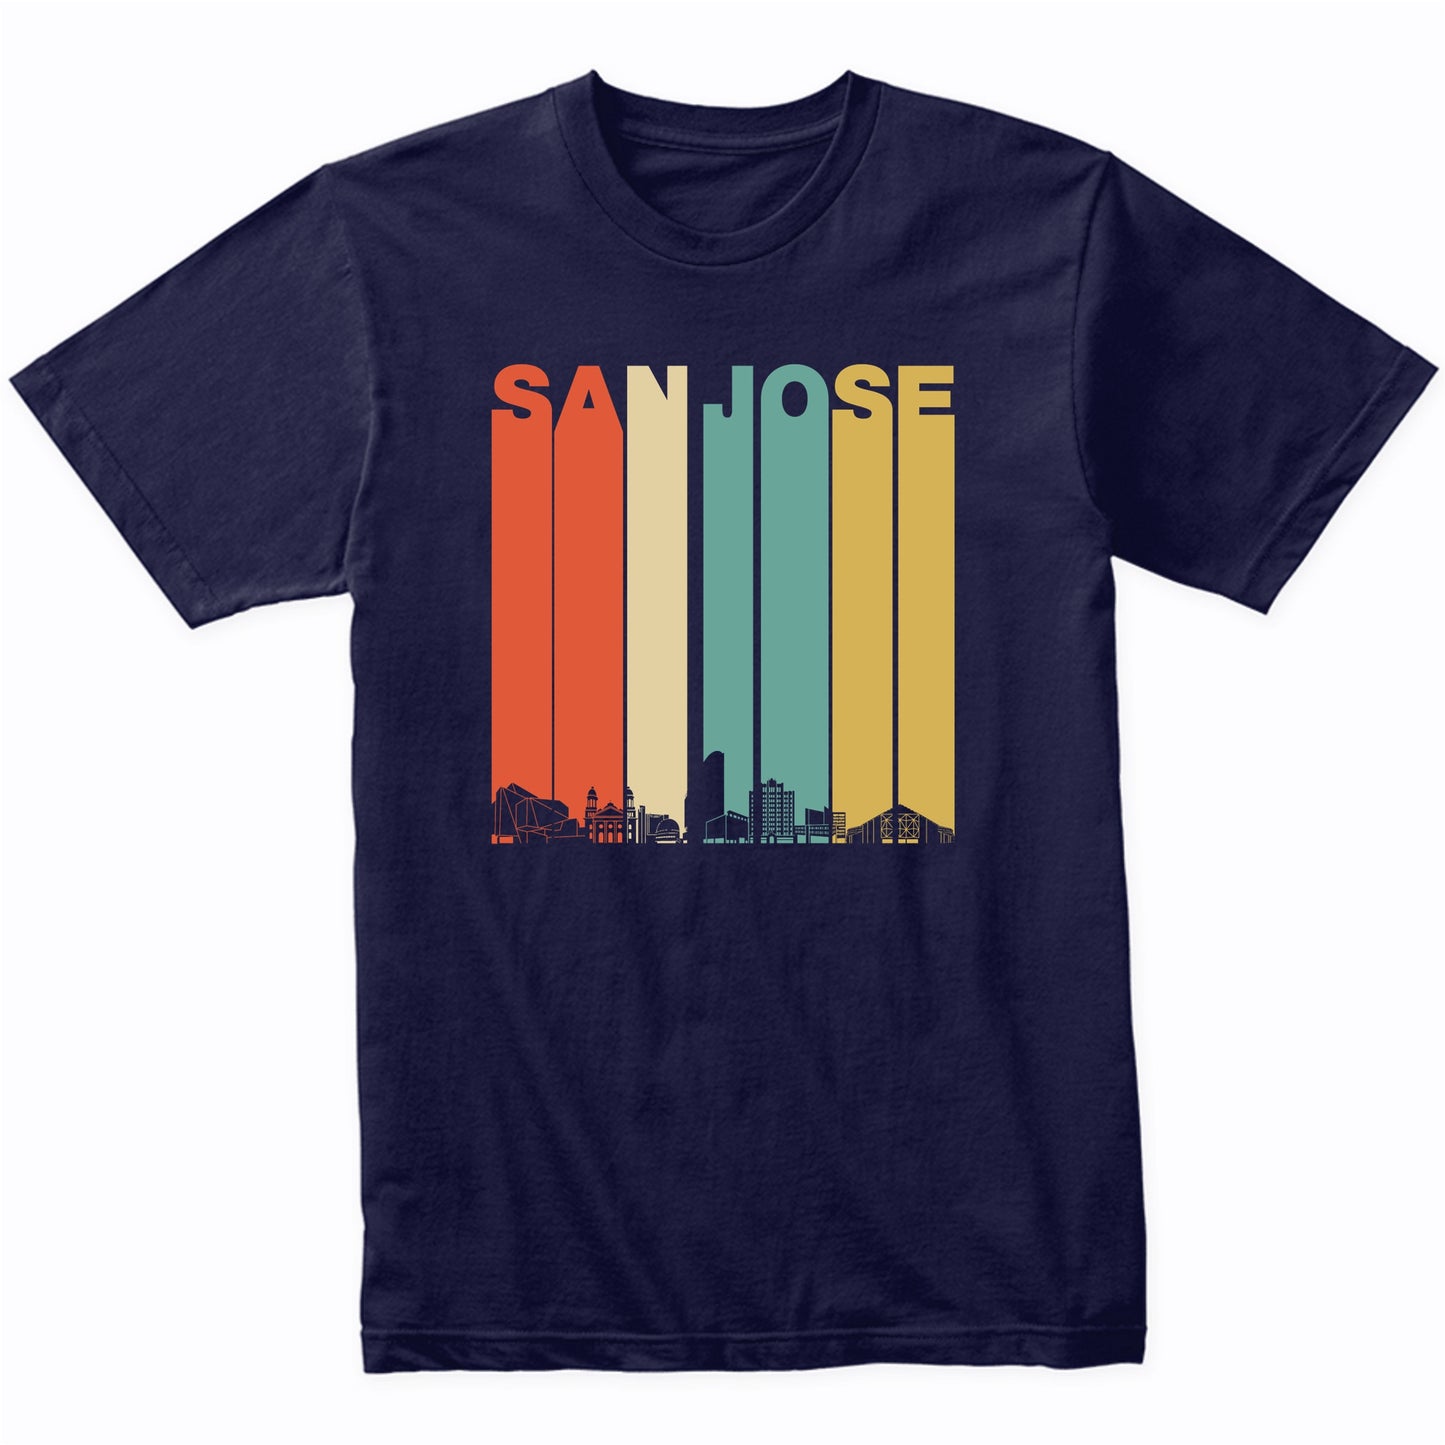 Vintage 1970's Style San Jose California Skyline T-Shirt